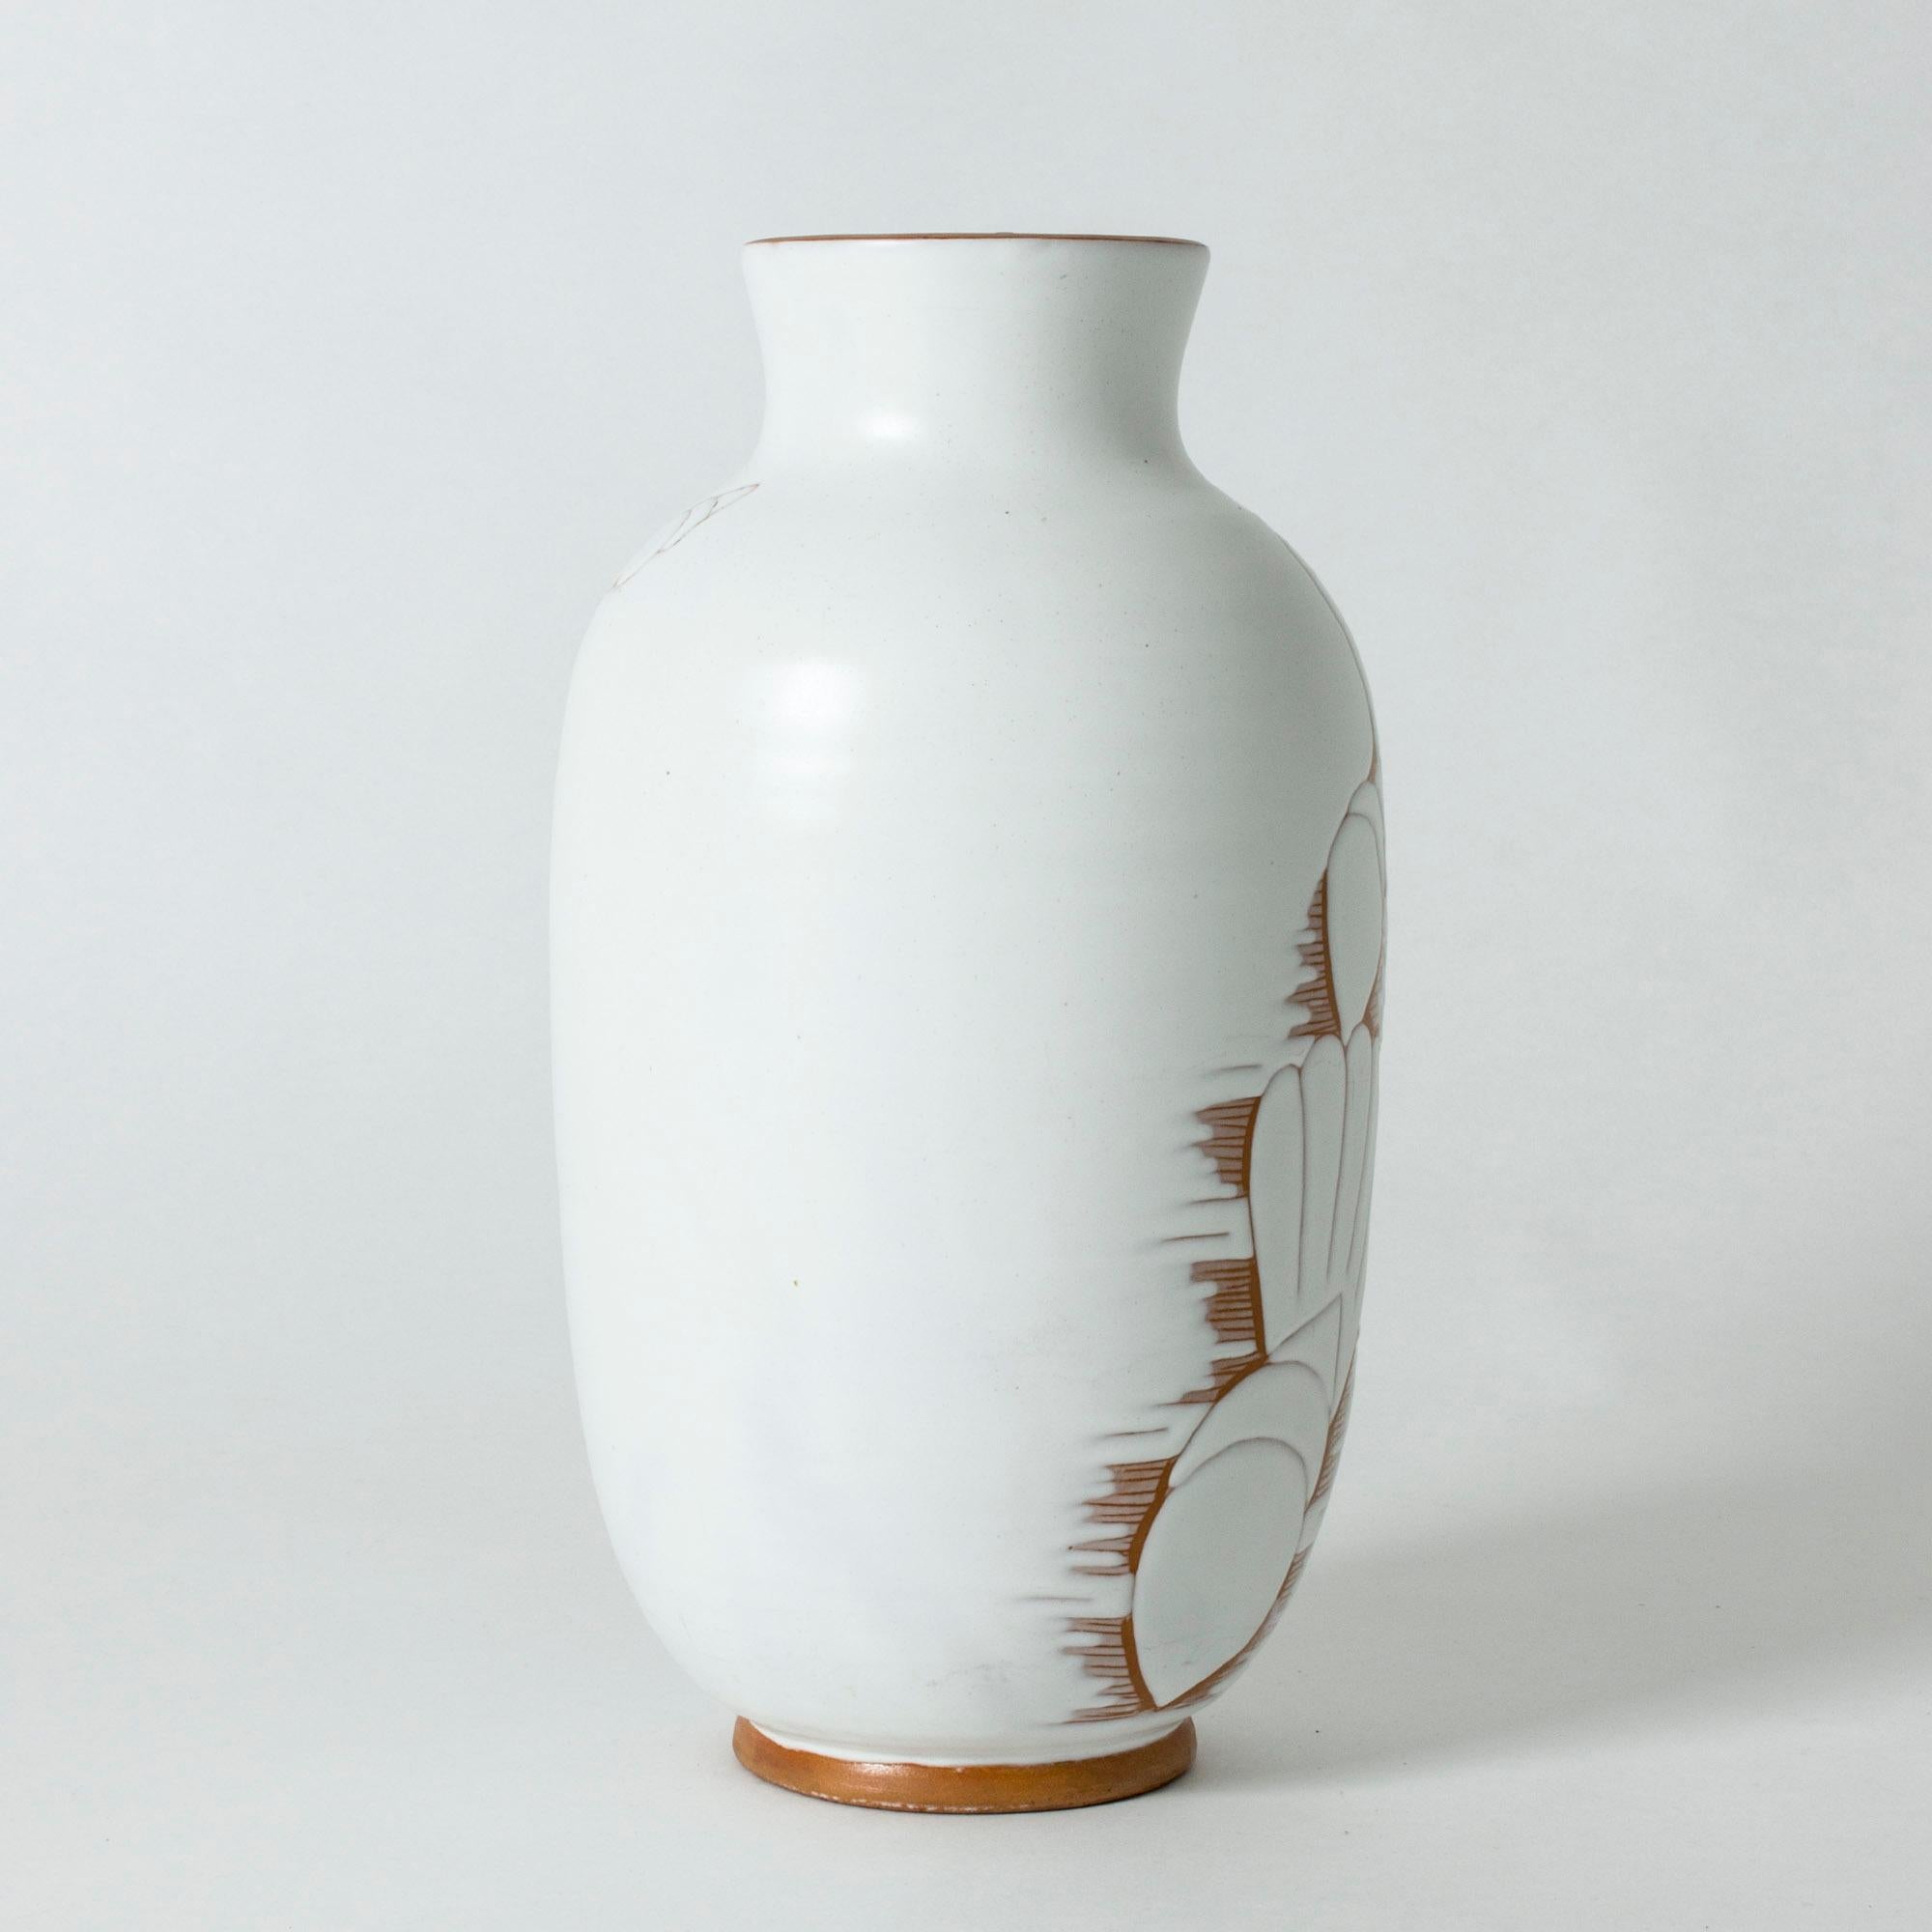 Scandinavian Modern Large Swedish ceramic earthenware vase by Anna-Lisa Thomson for Upsala-Ekeby